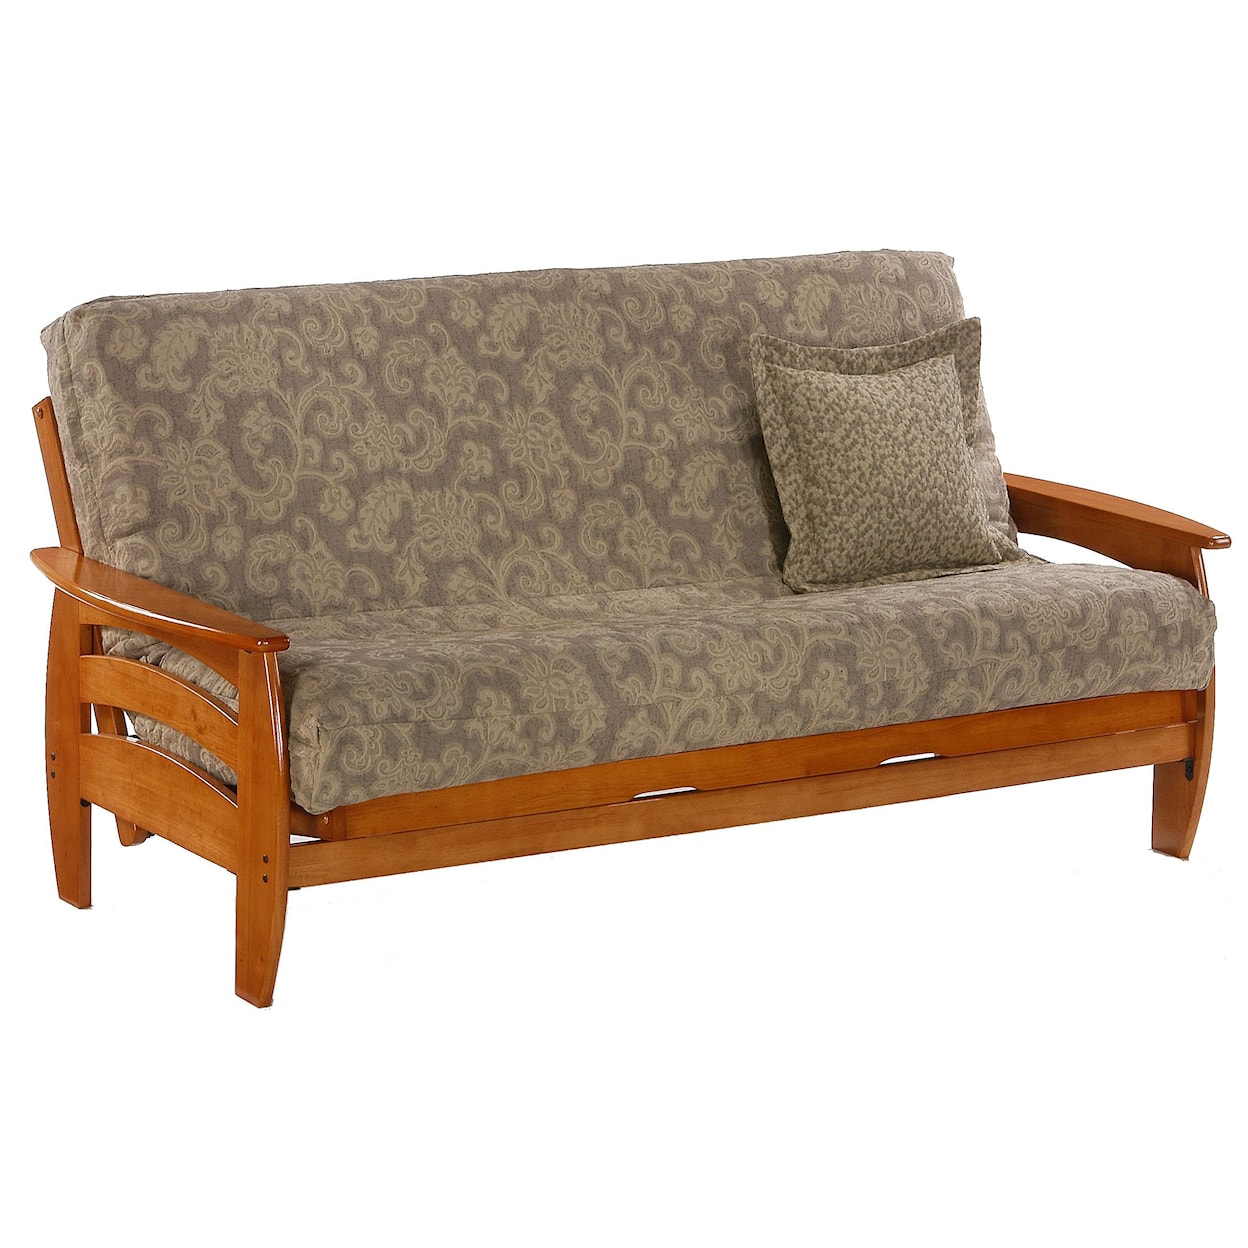 Night & Day Furniture Corona Honey Oak Chair Size Futon